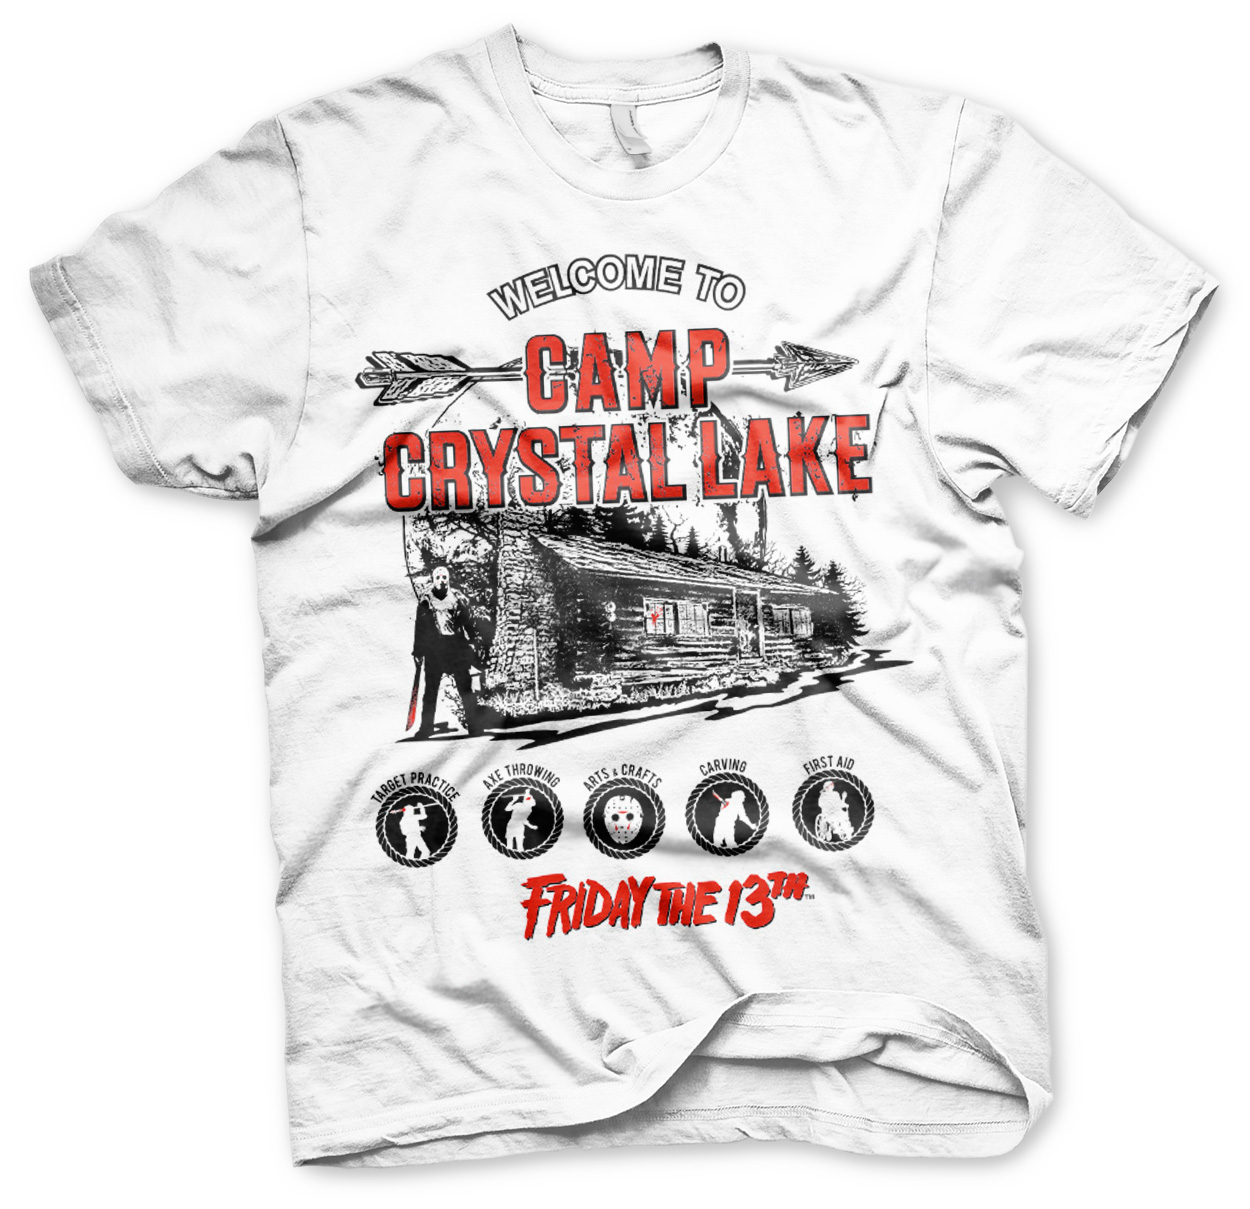 FRIDAY THE 13TH: Camp Crystal Lake T-Shirt (White)